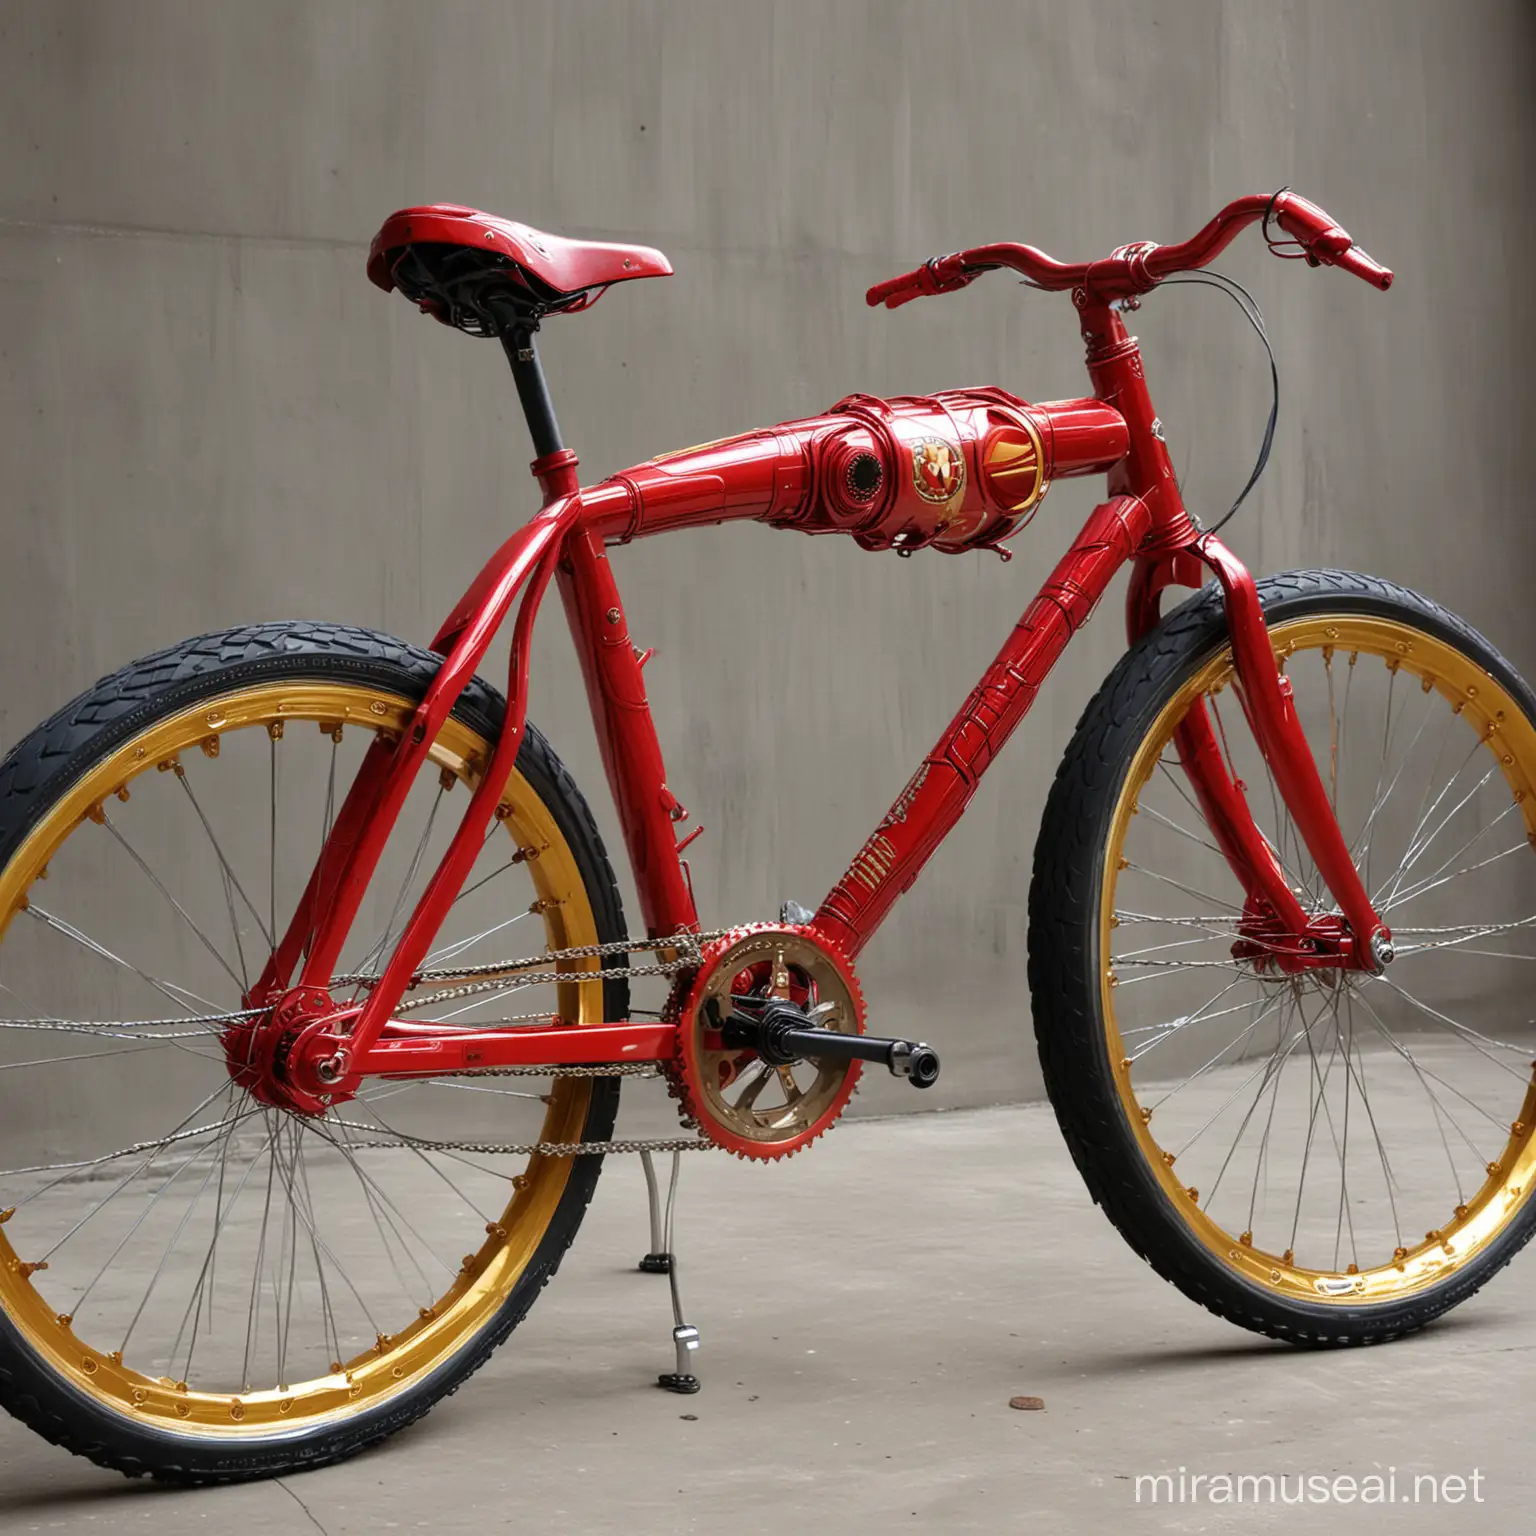 Futuristic Iron Man Style Bicycle with Advanced Design